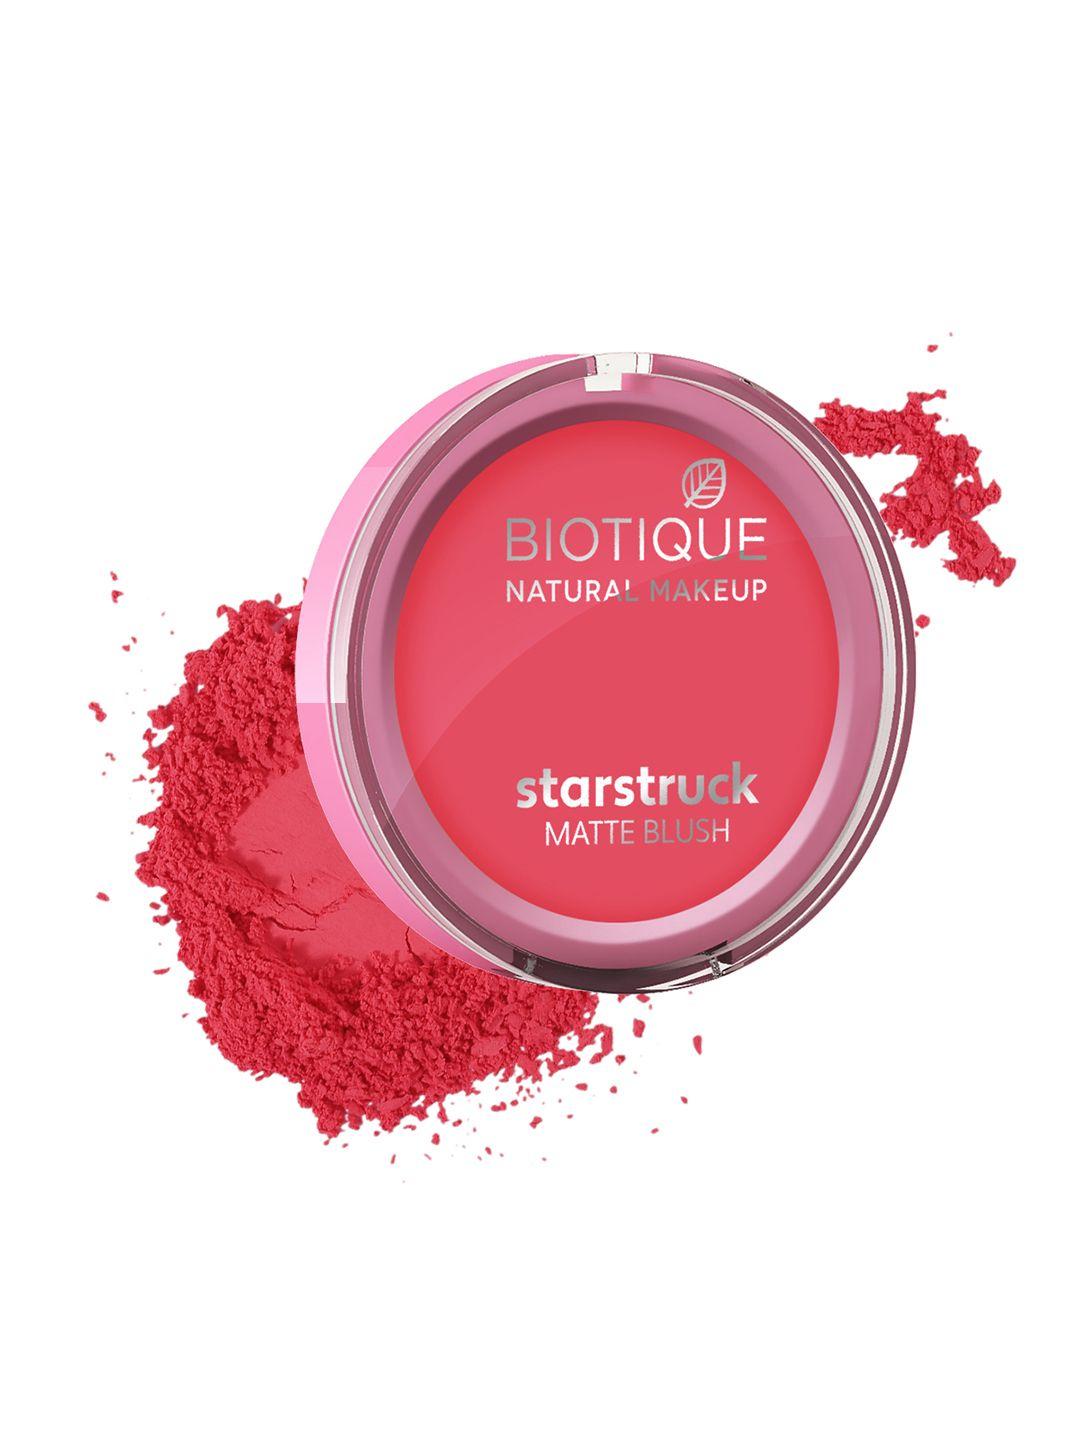 biotique natural makeup starstruck satin matte blush - promise in pink